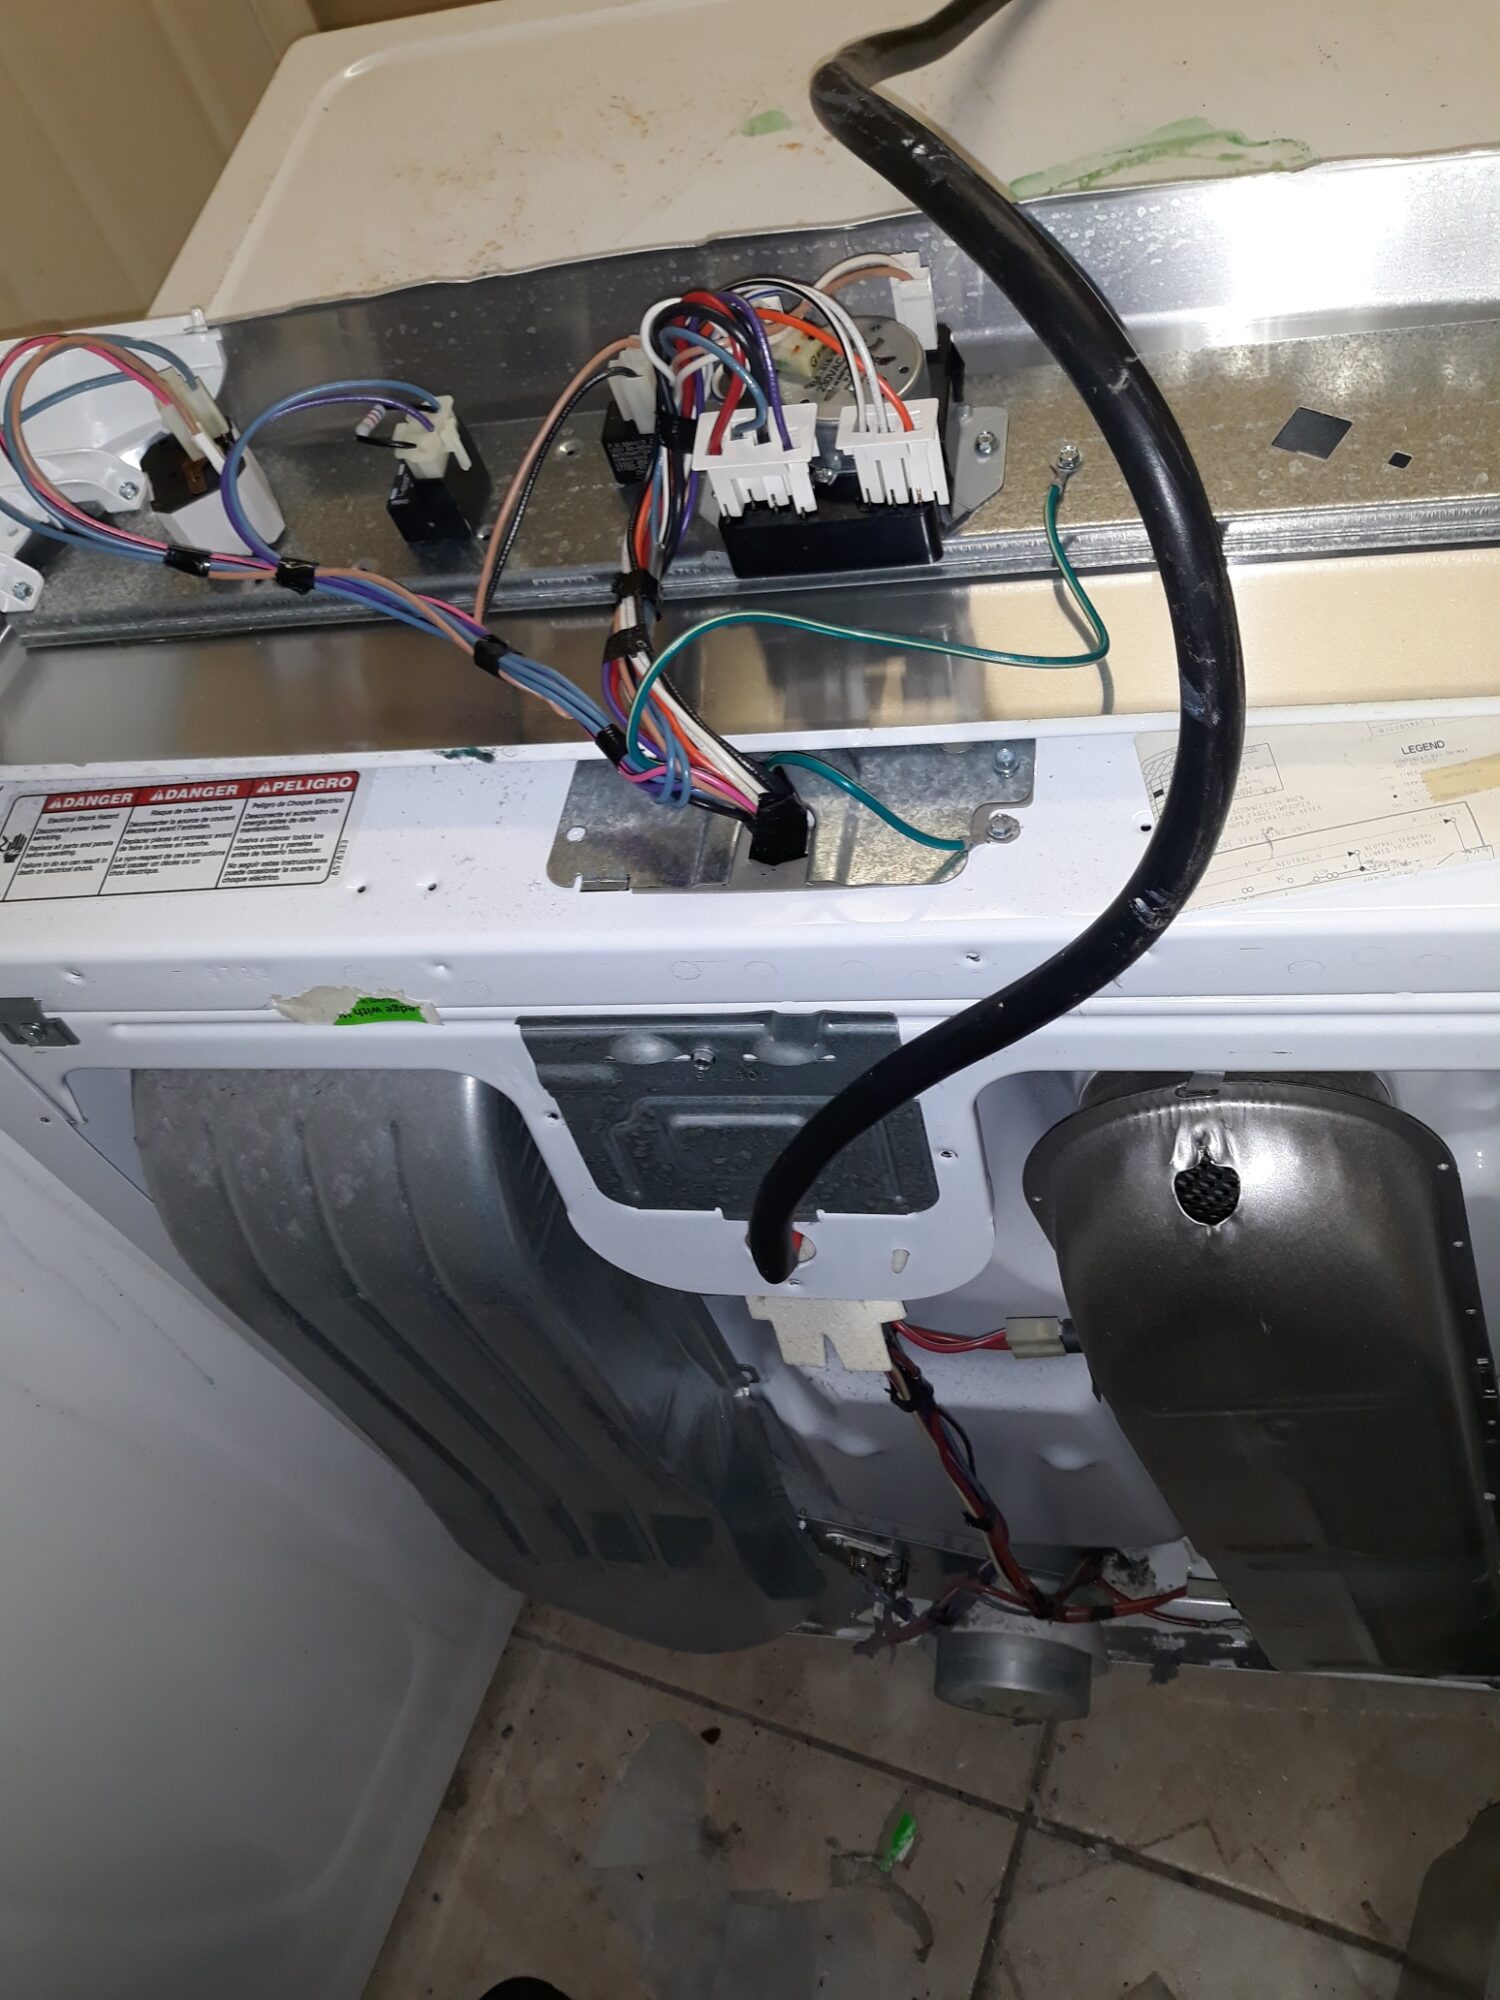 appliance repair dryer repair repair require replacement of several failed parts bulkley place eustis fl 32726